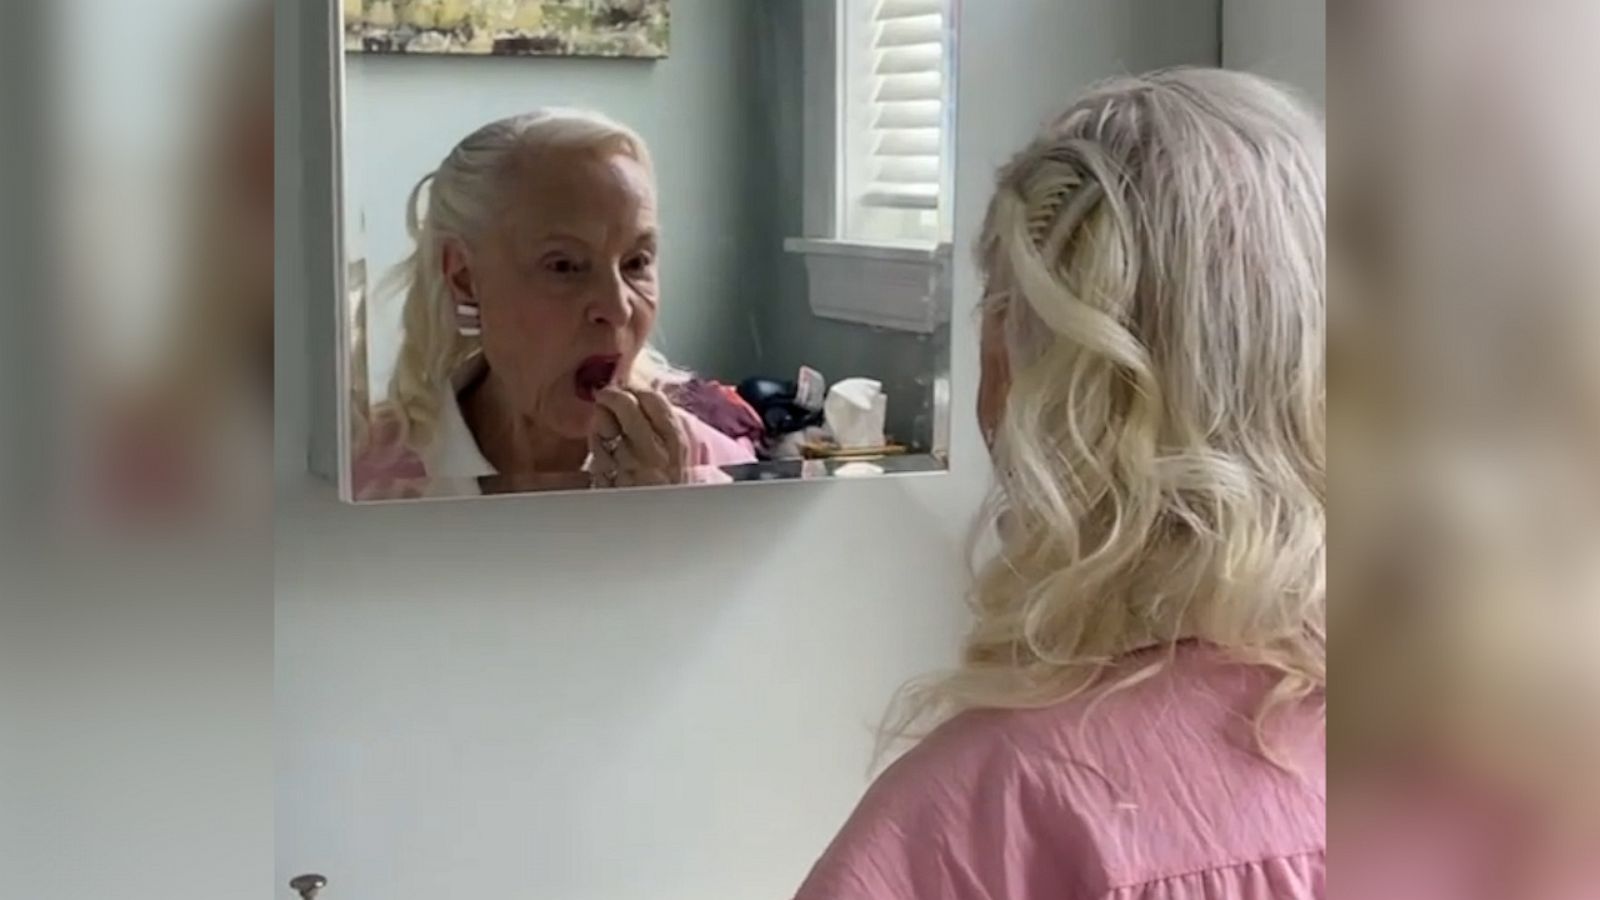 VIDEO: Woman takes 93-year-old grandma to see 'Barbie'